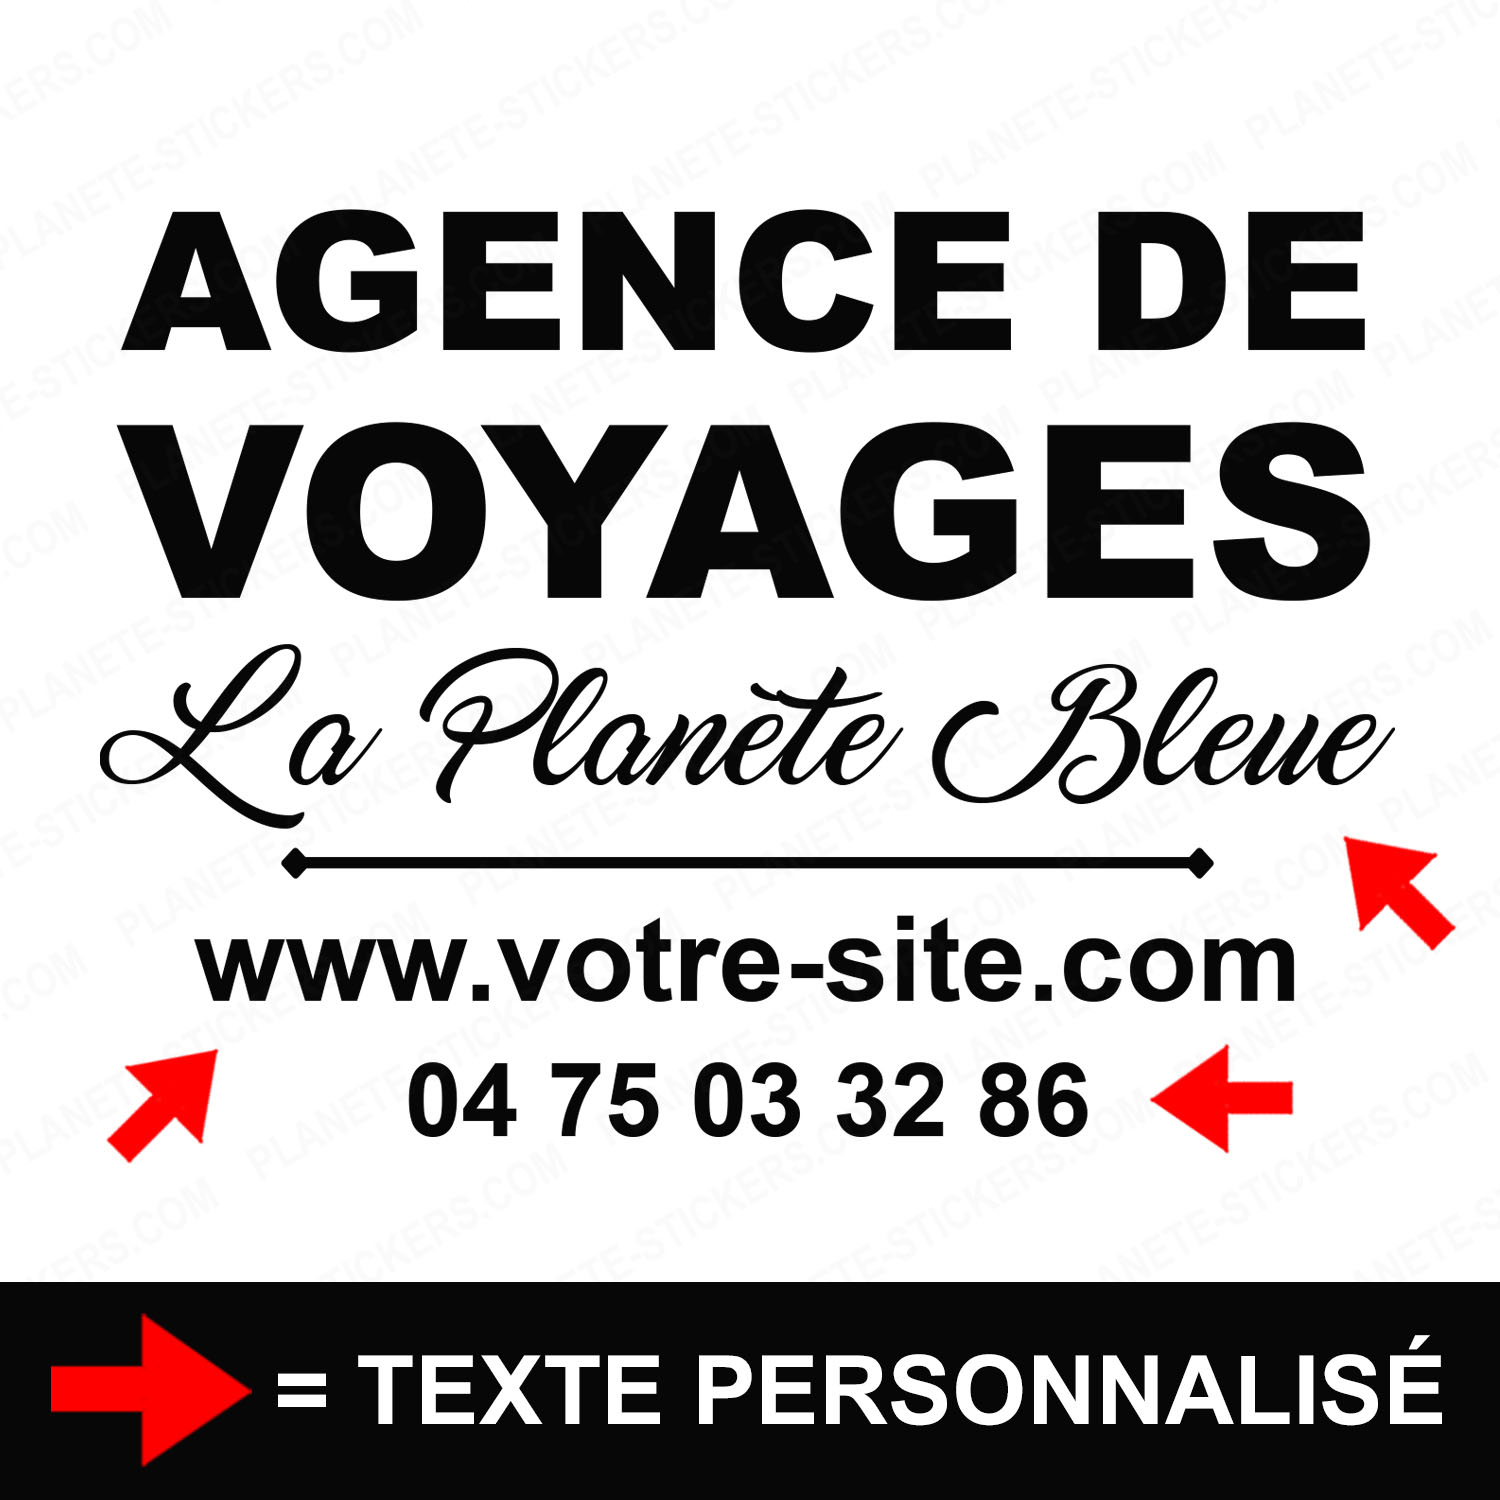 ref10agencedevoyagesvitrine-stickers-agence-de-voyages-vitrine-sticker-voyagiste-personnalisé-autocollant-vitrophanie-agent-voyage-vitre-logo-écriture-2